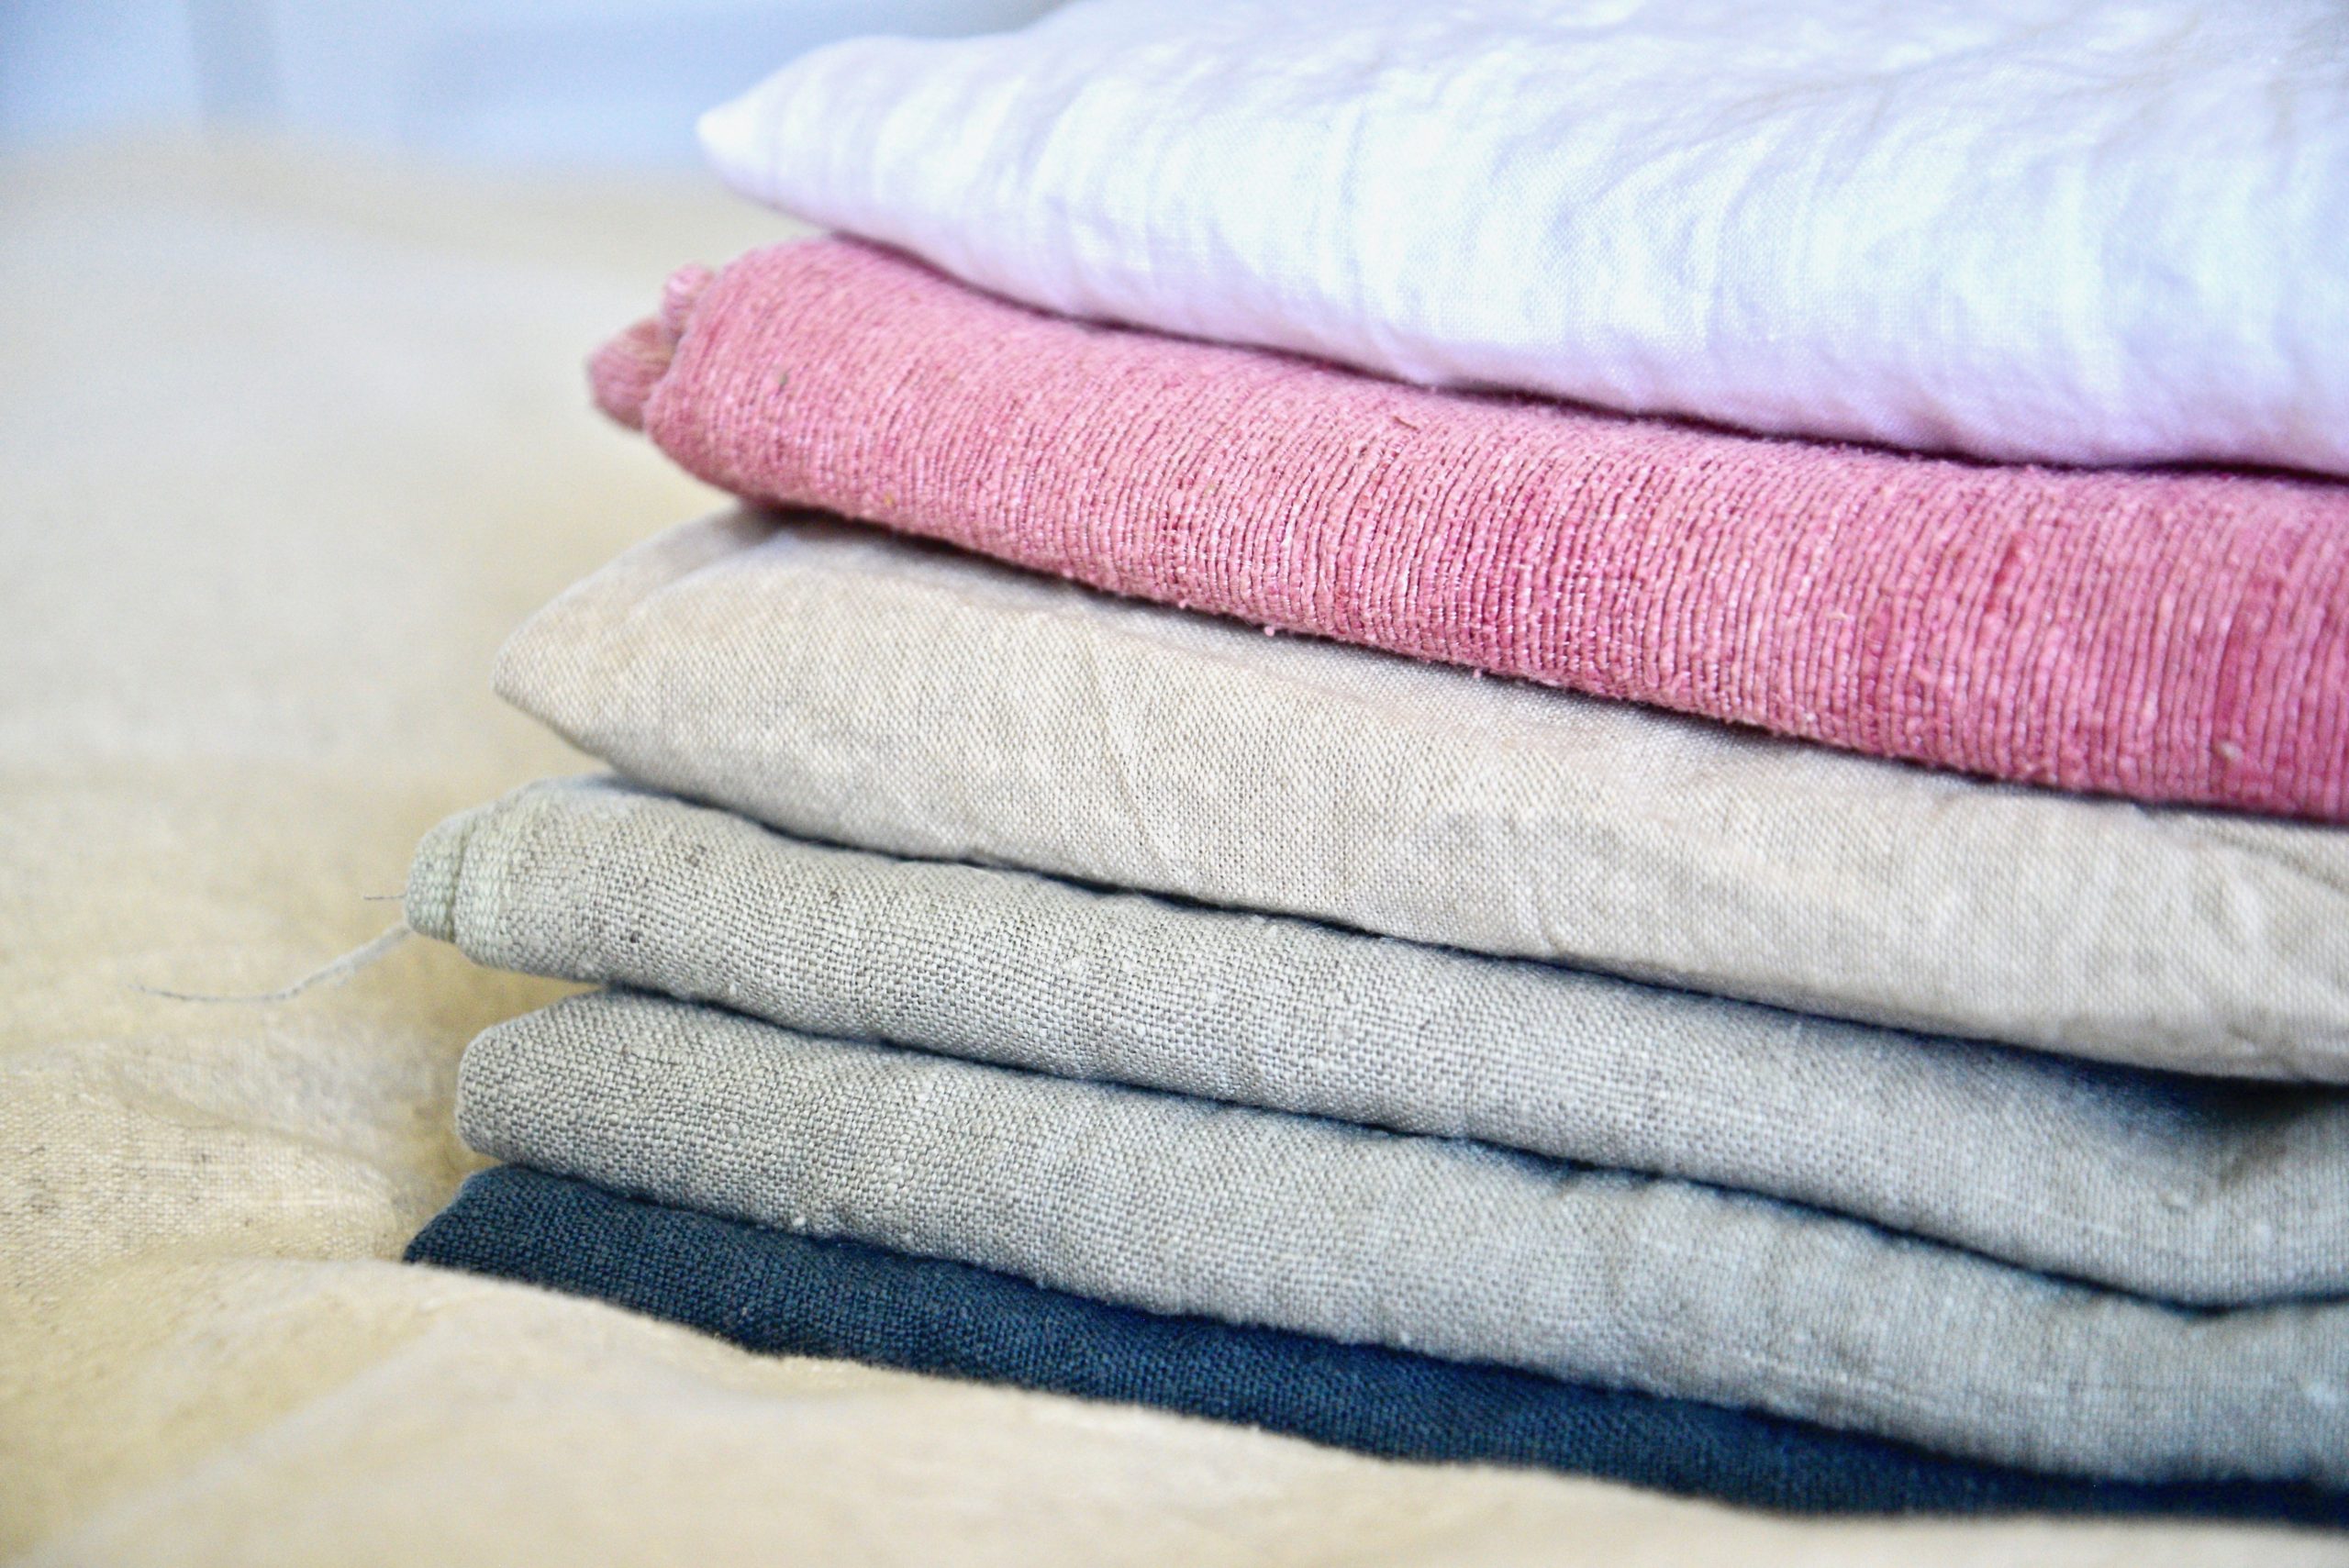 Why I Love Linen